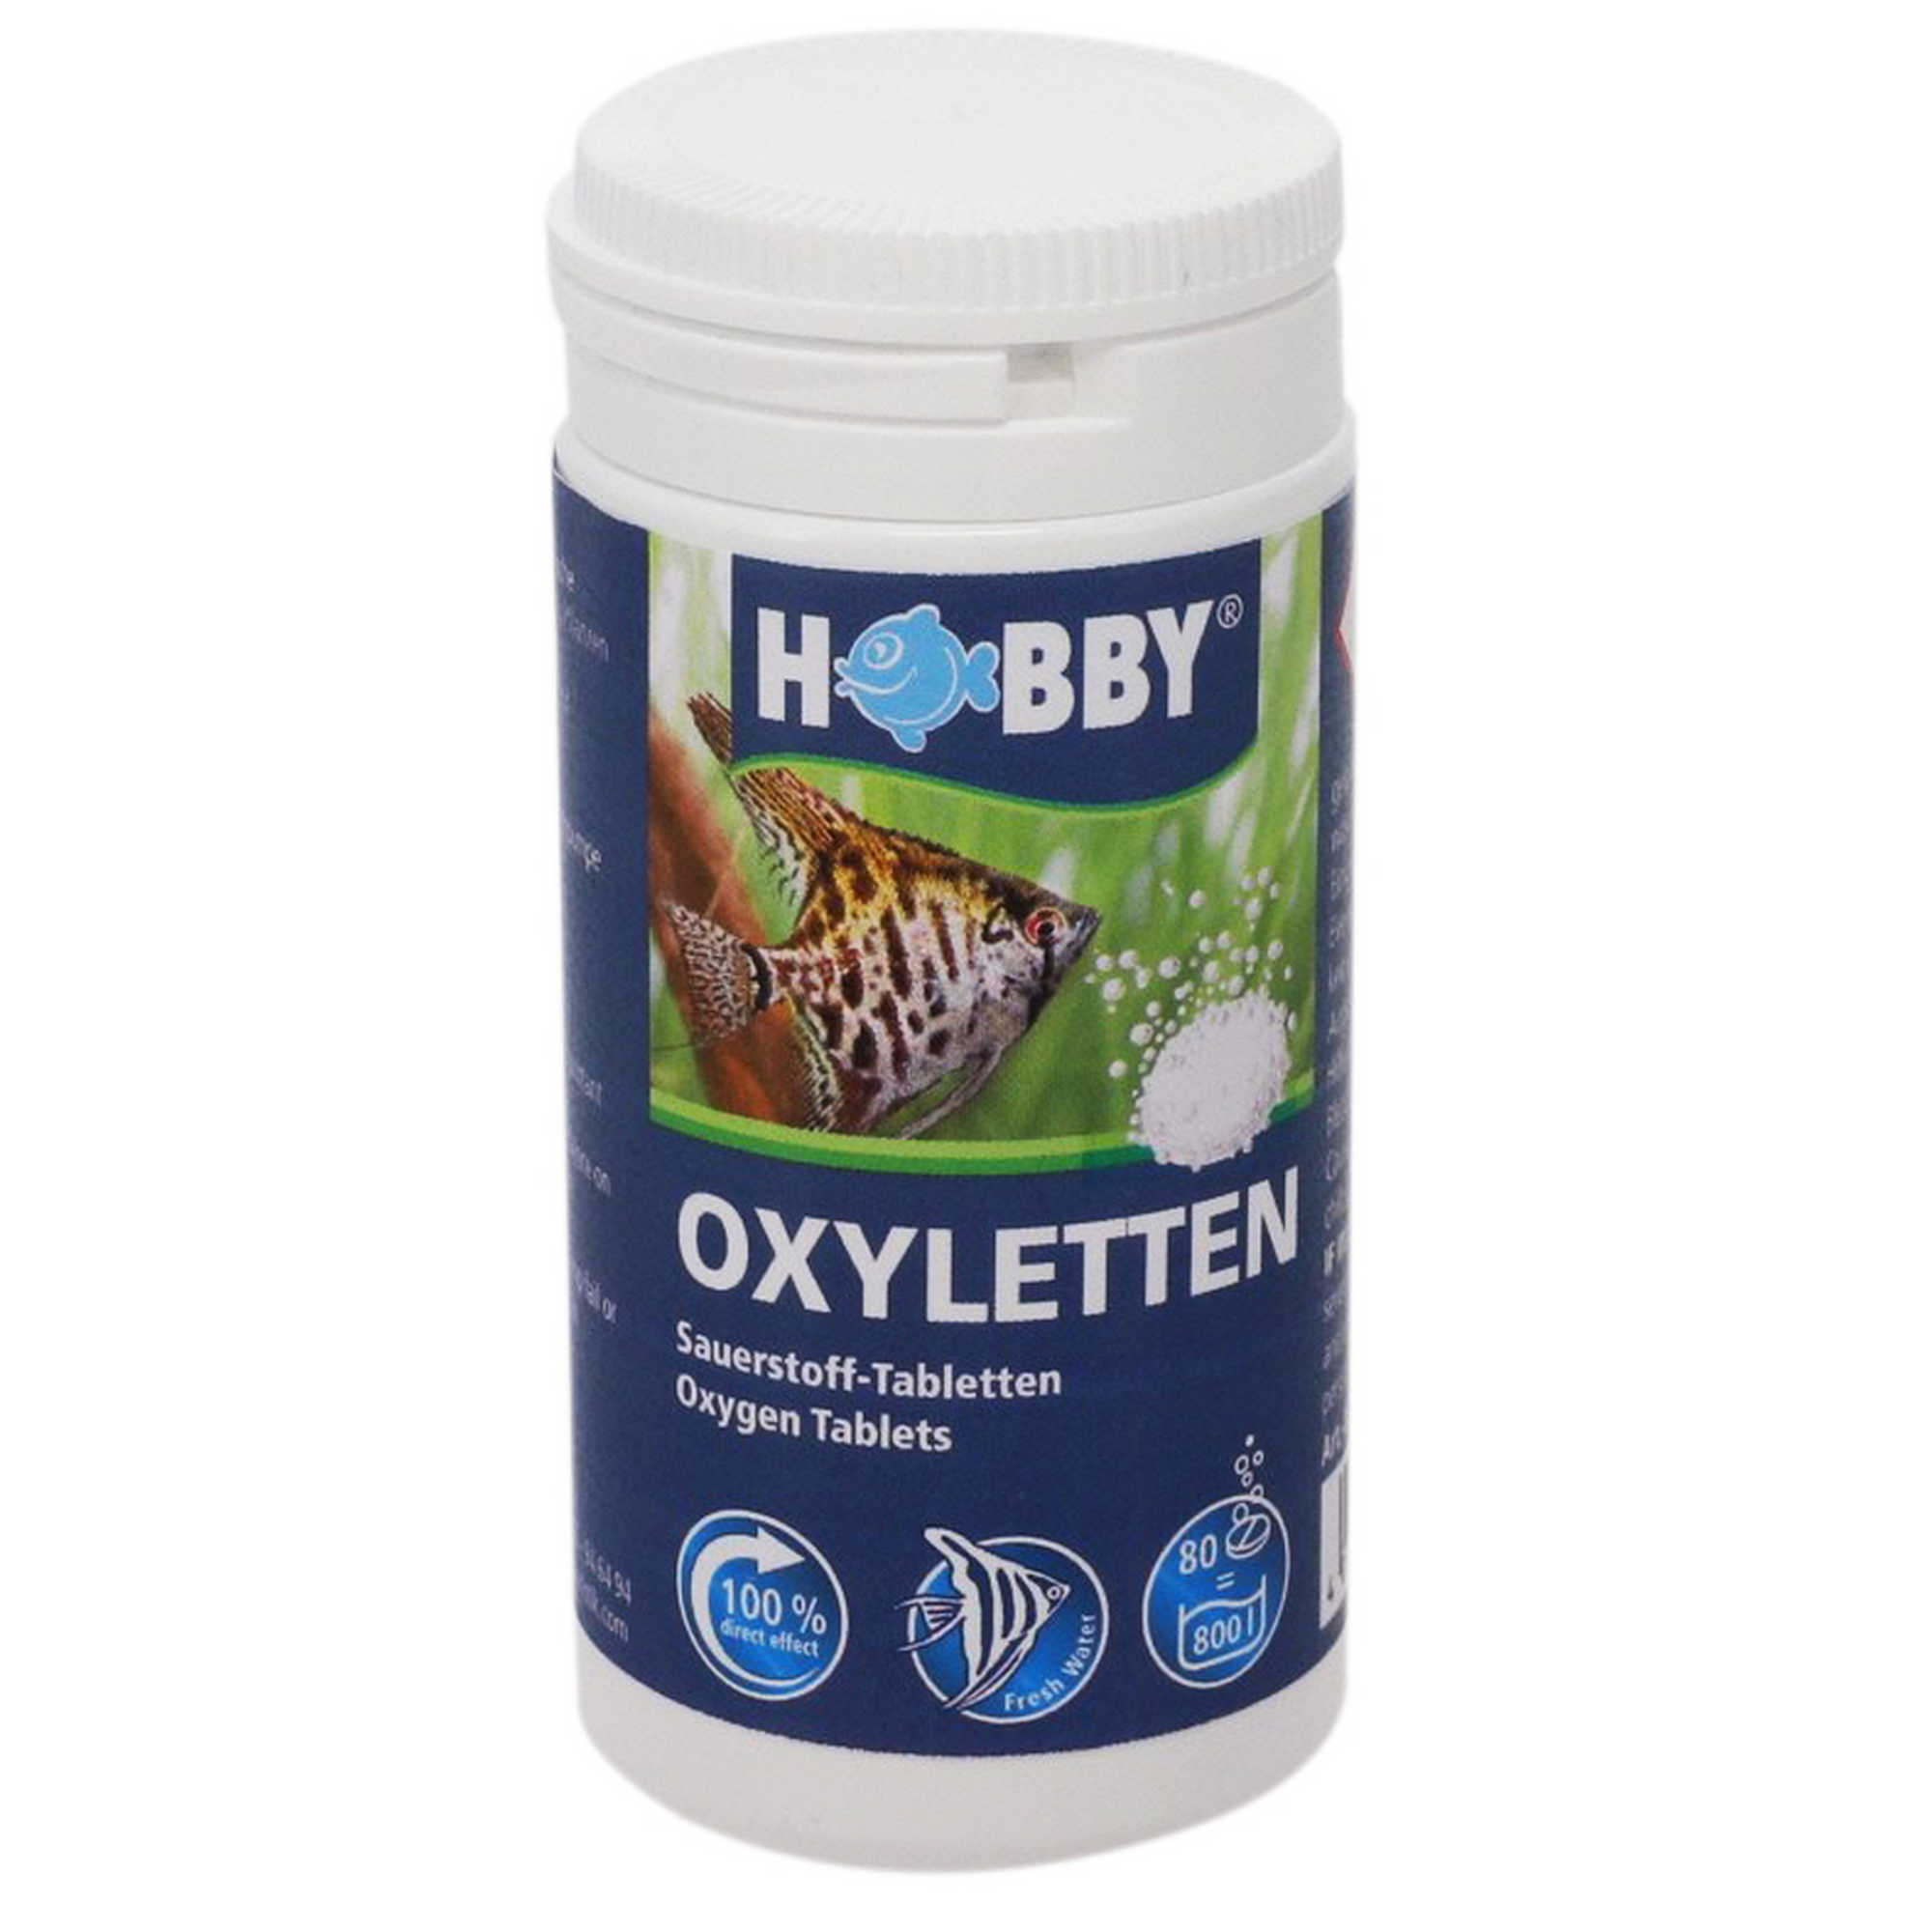 Sauerstoff-Tabletten 'Oxyletten' 80 Stück + product picture